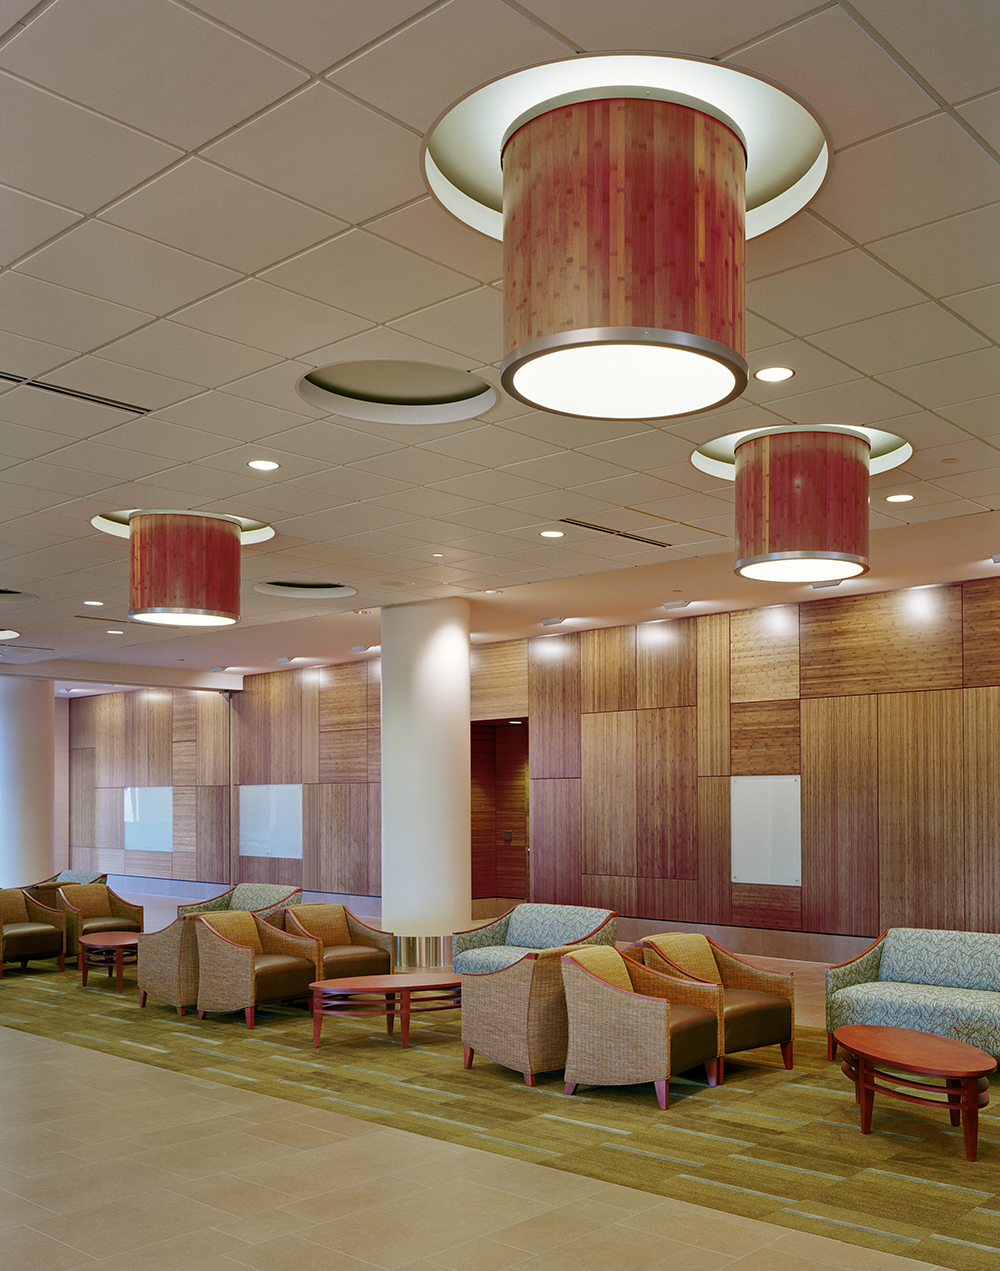 Large, wood-paneled custom light fixtures mounted above a warm waiting room.